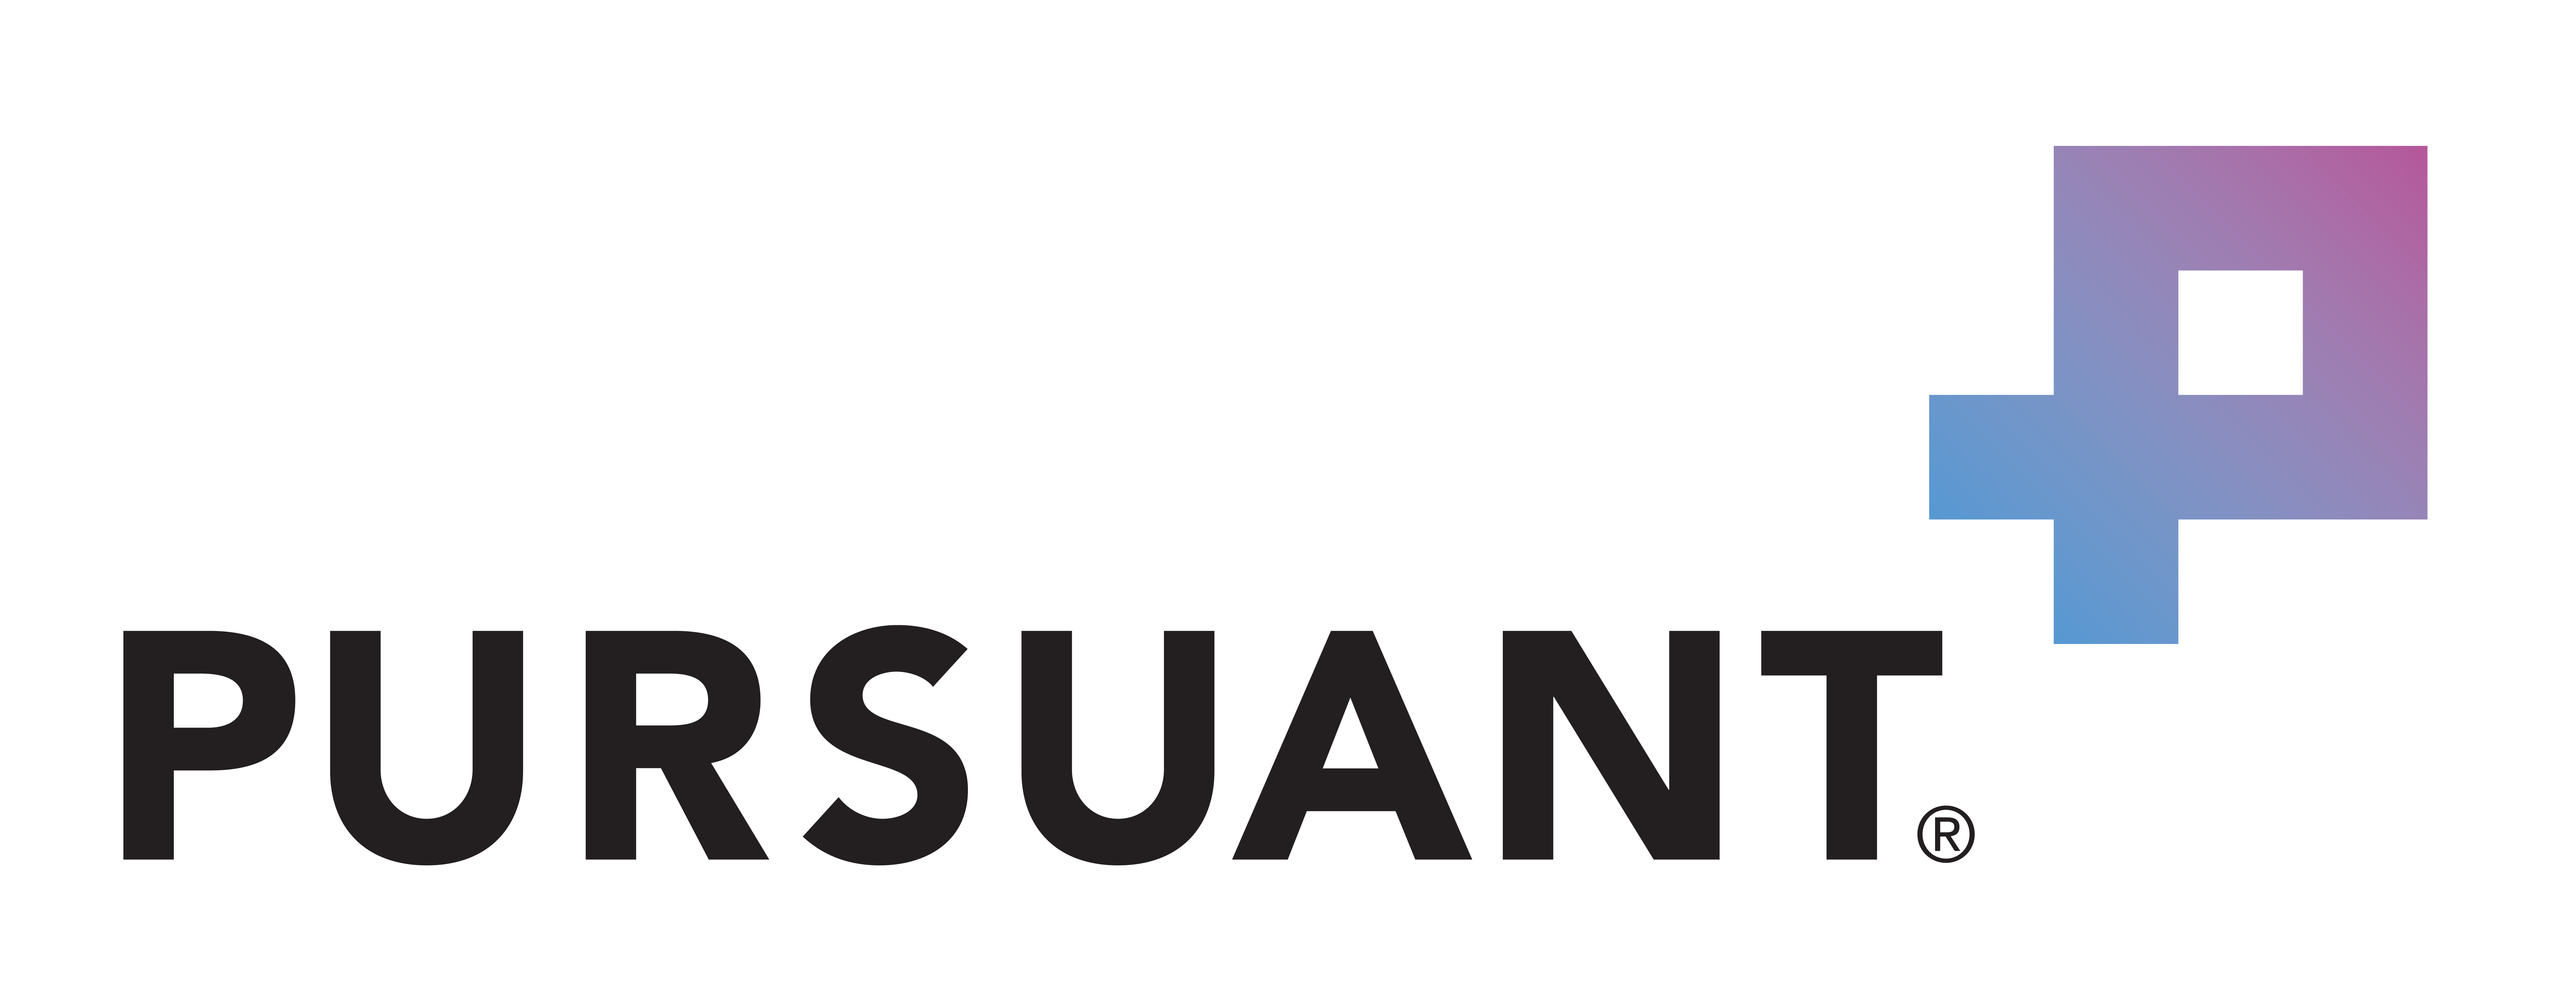 Pursuant-Logo